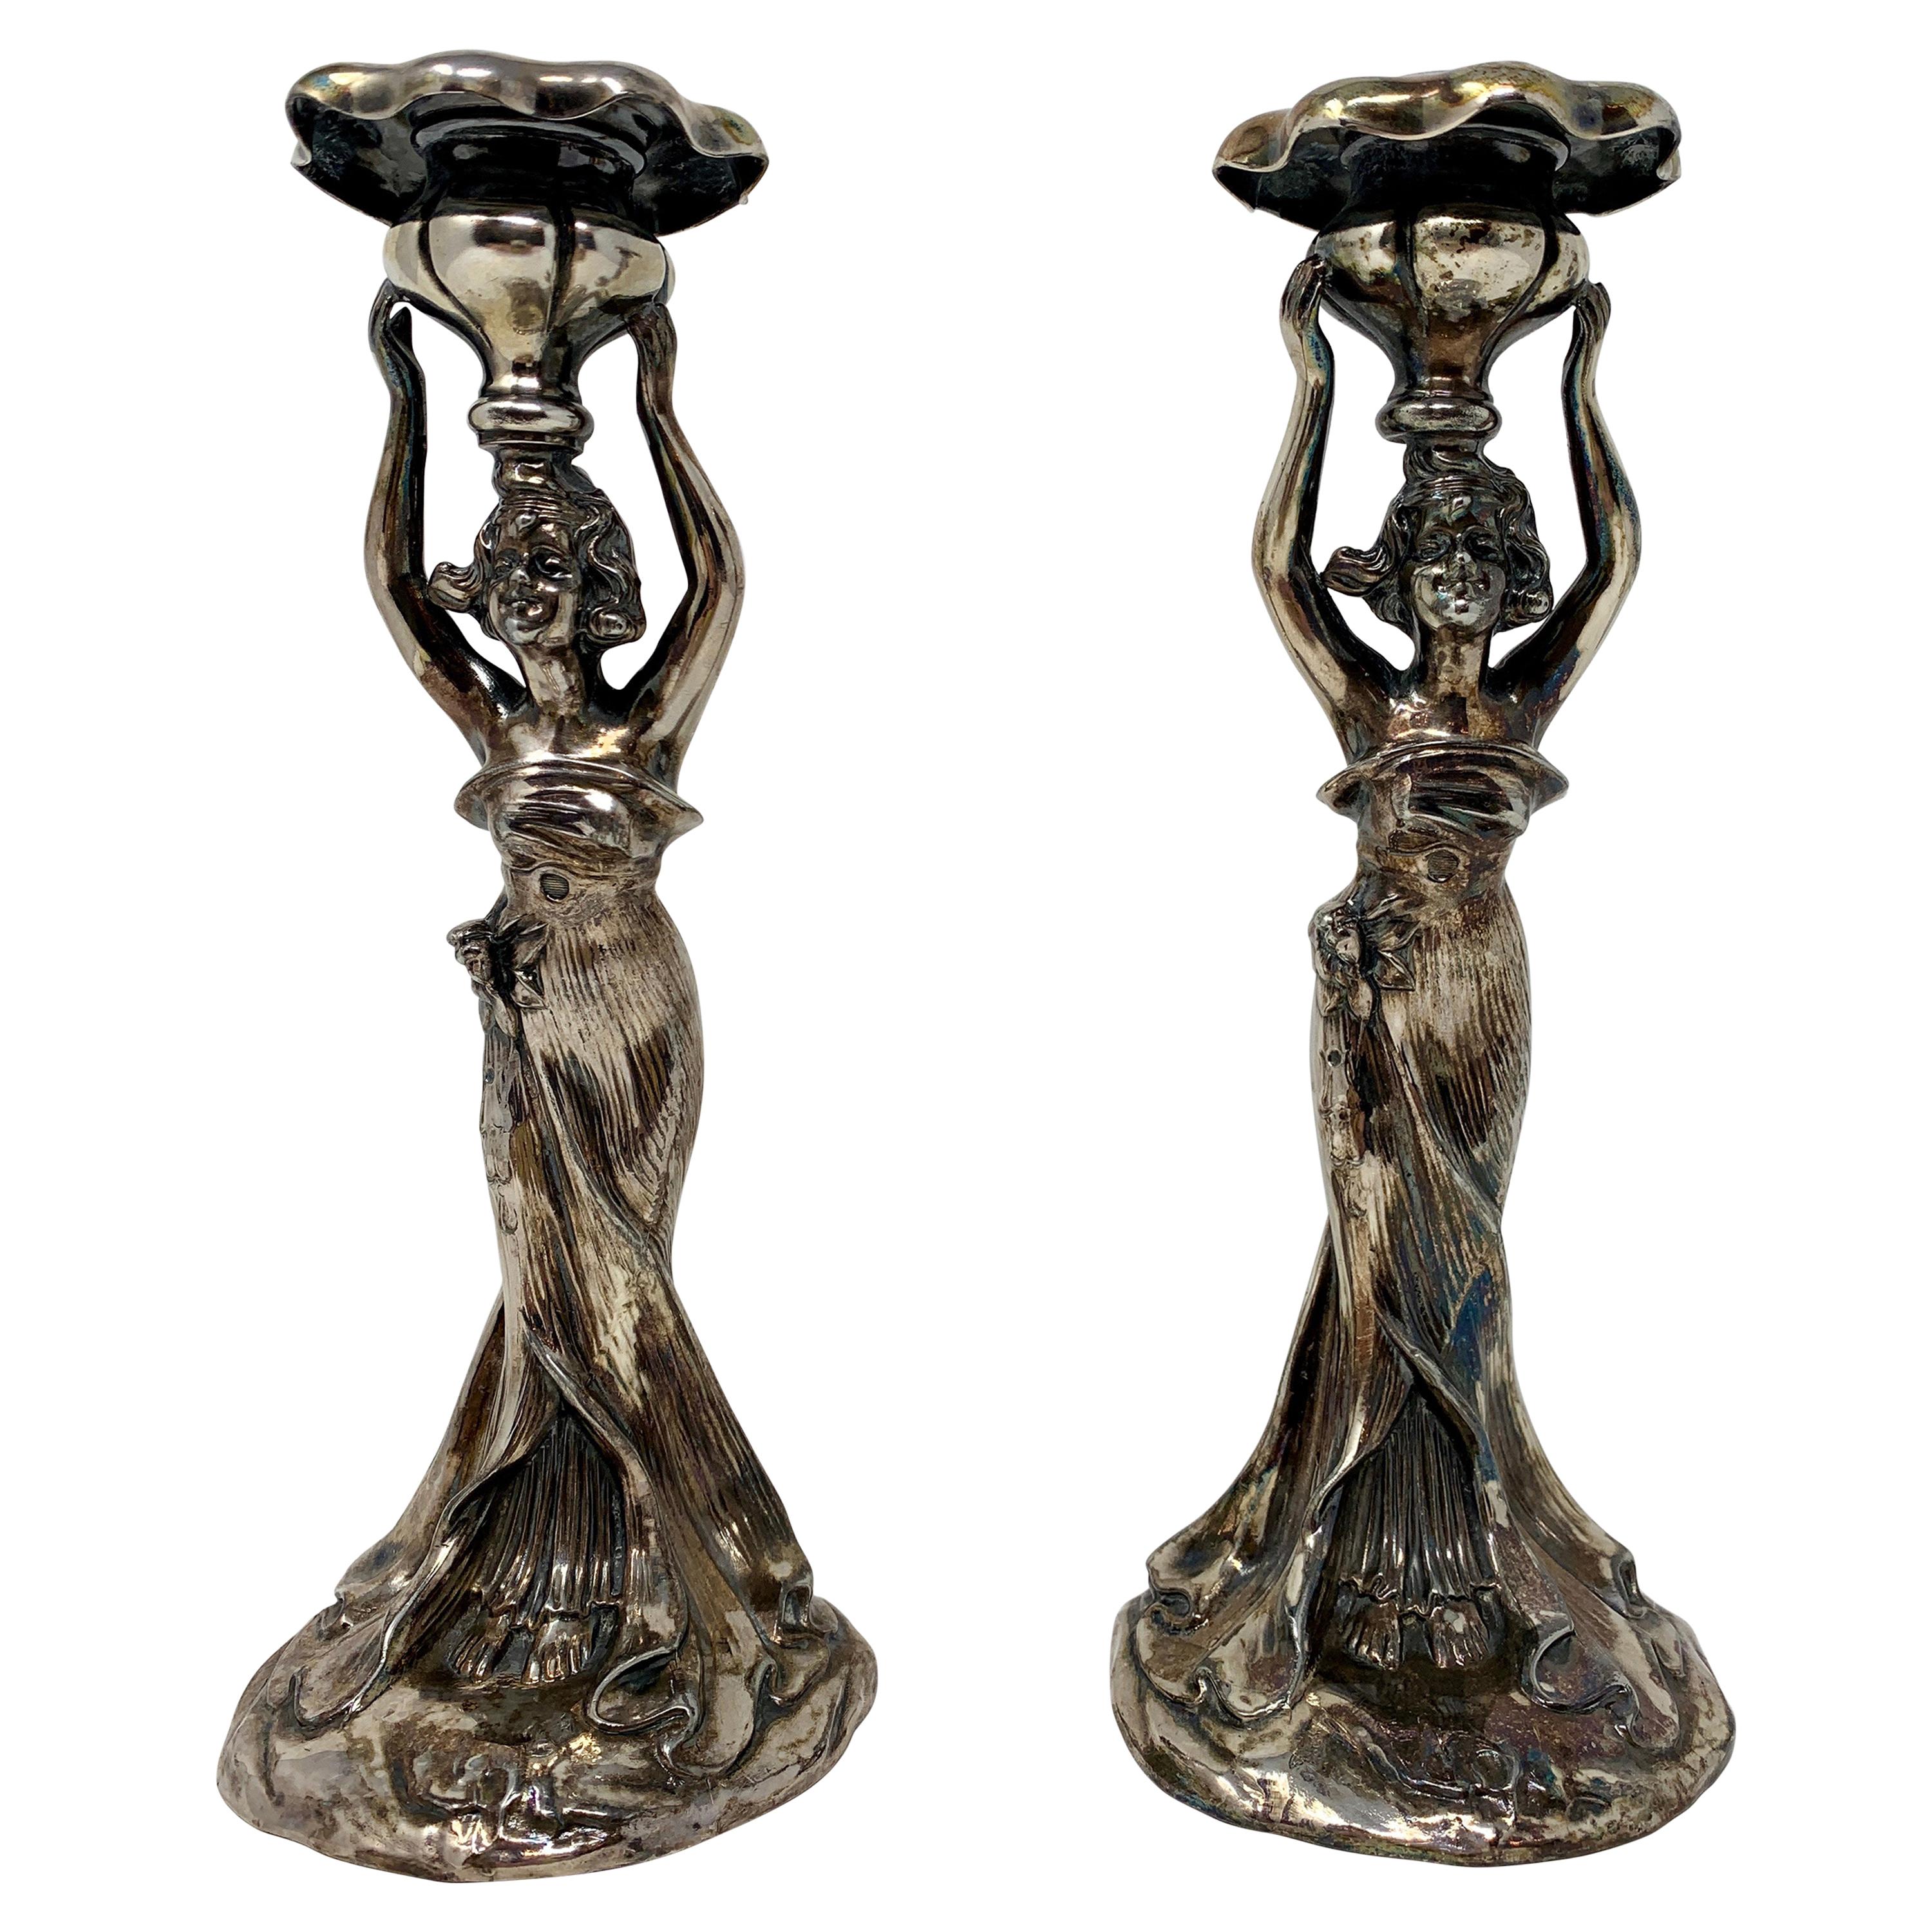 Pair of "Art Nouveau" Silver Plated Candlesticks